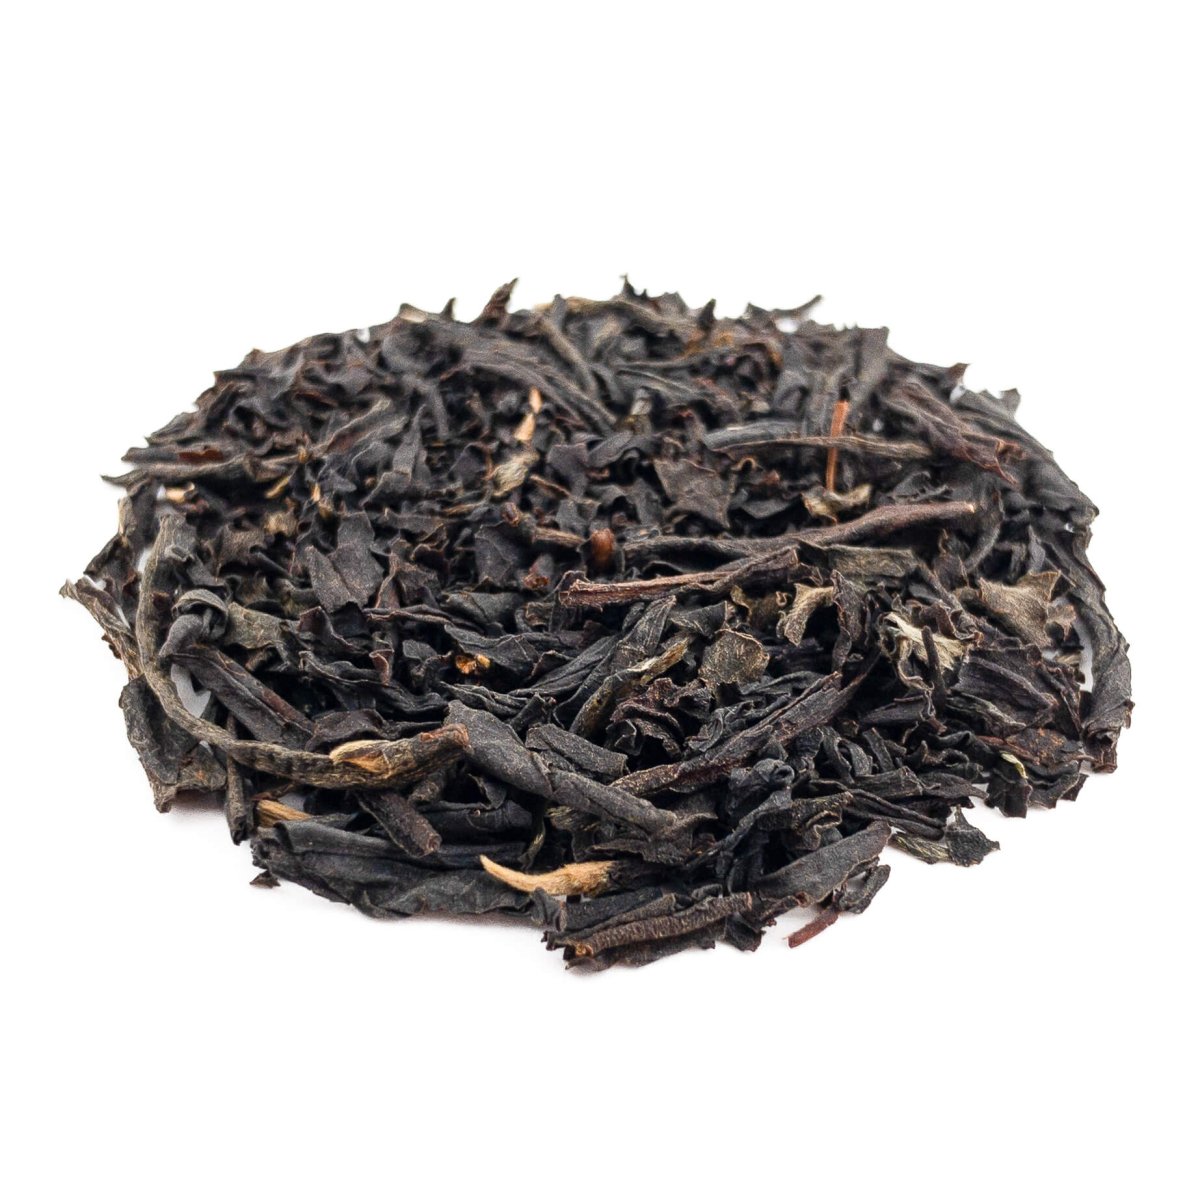 Cinnamon Wood Smoked Tea from AMBA Estate (Organic)